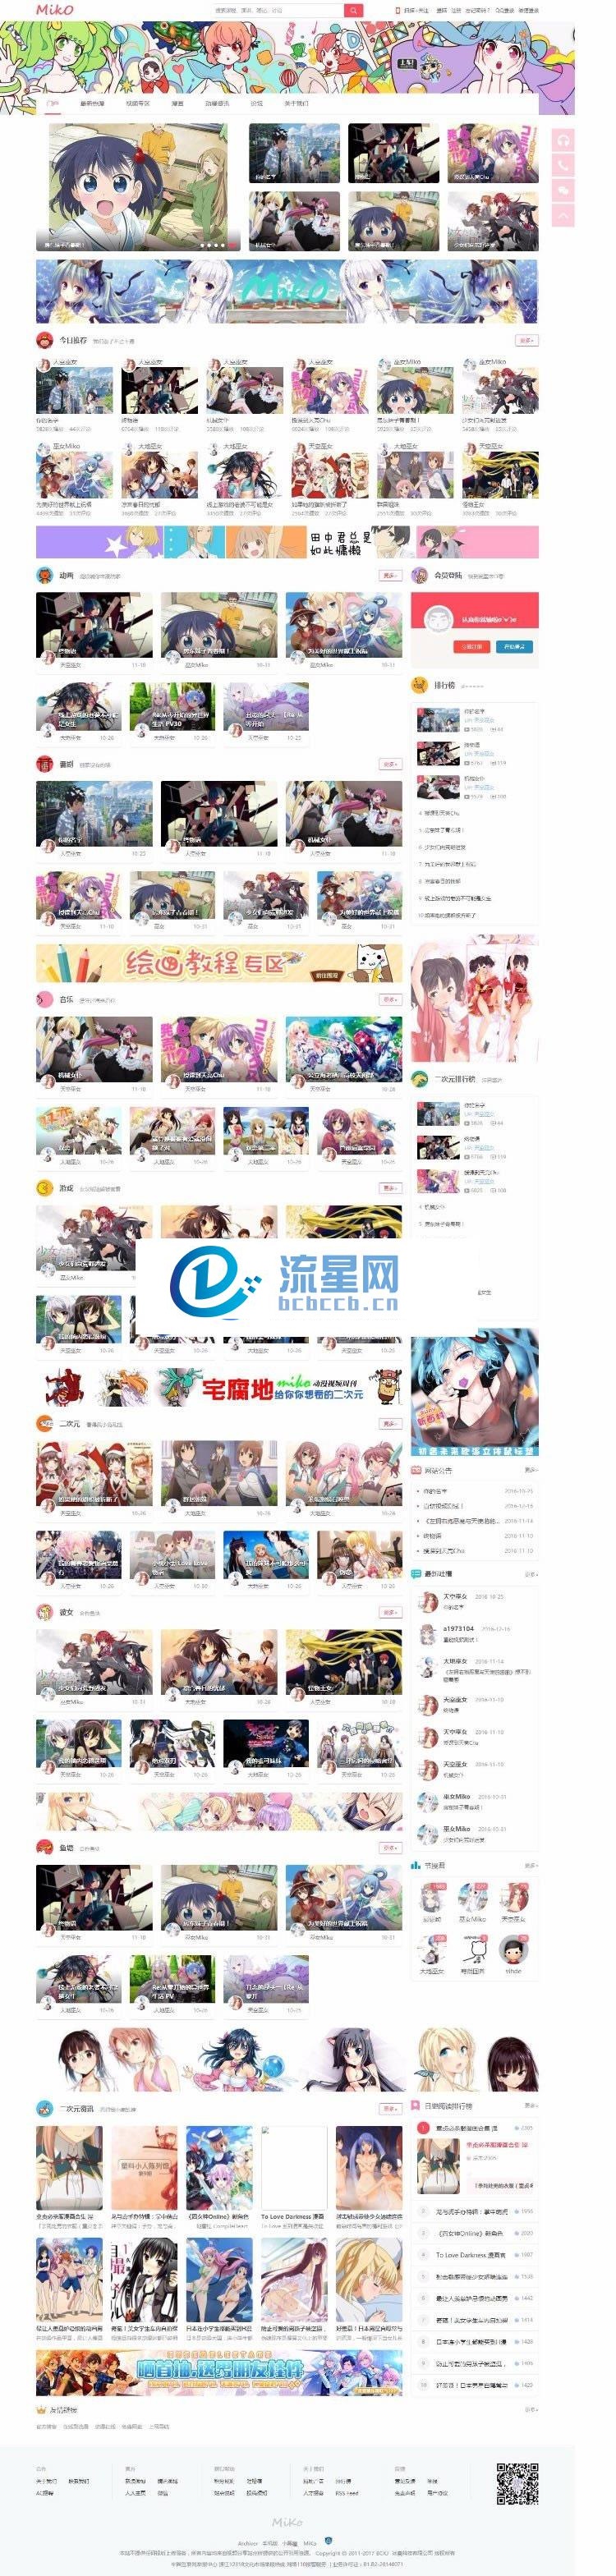 Miko弹幕视频网源码 动漫视频网站模板 Discuz后台